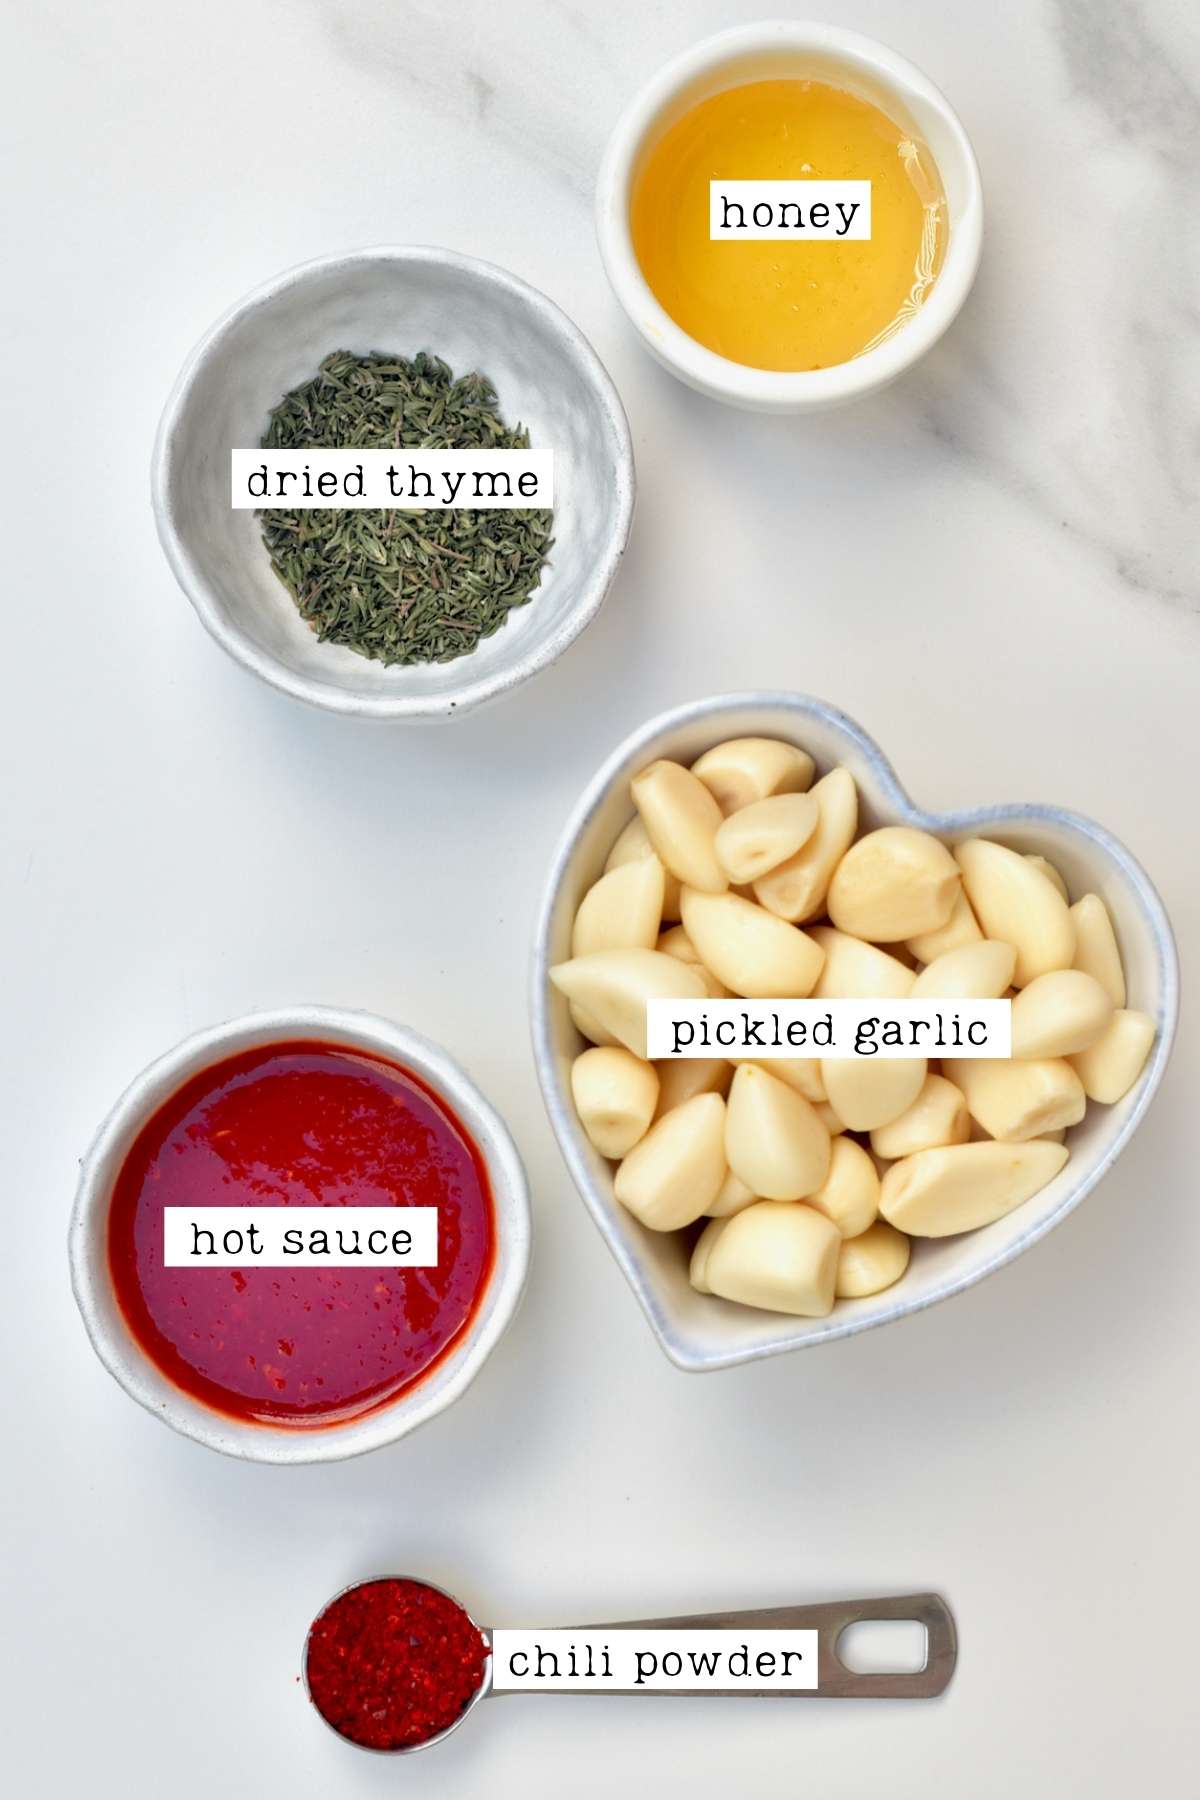 Spicy Pickled Garlic Ingredients